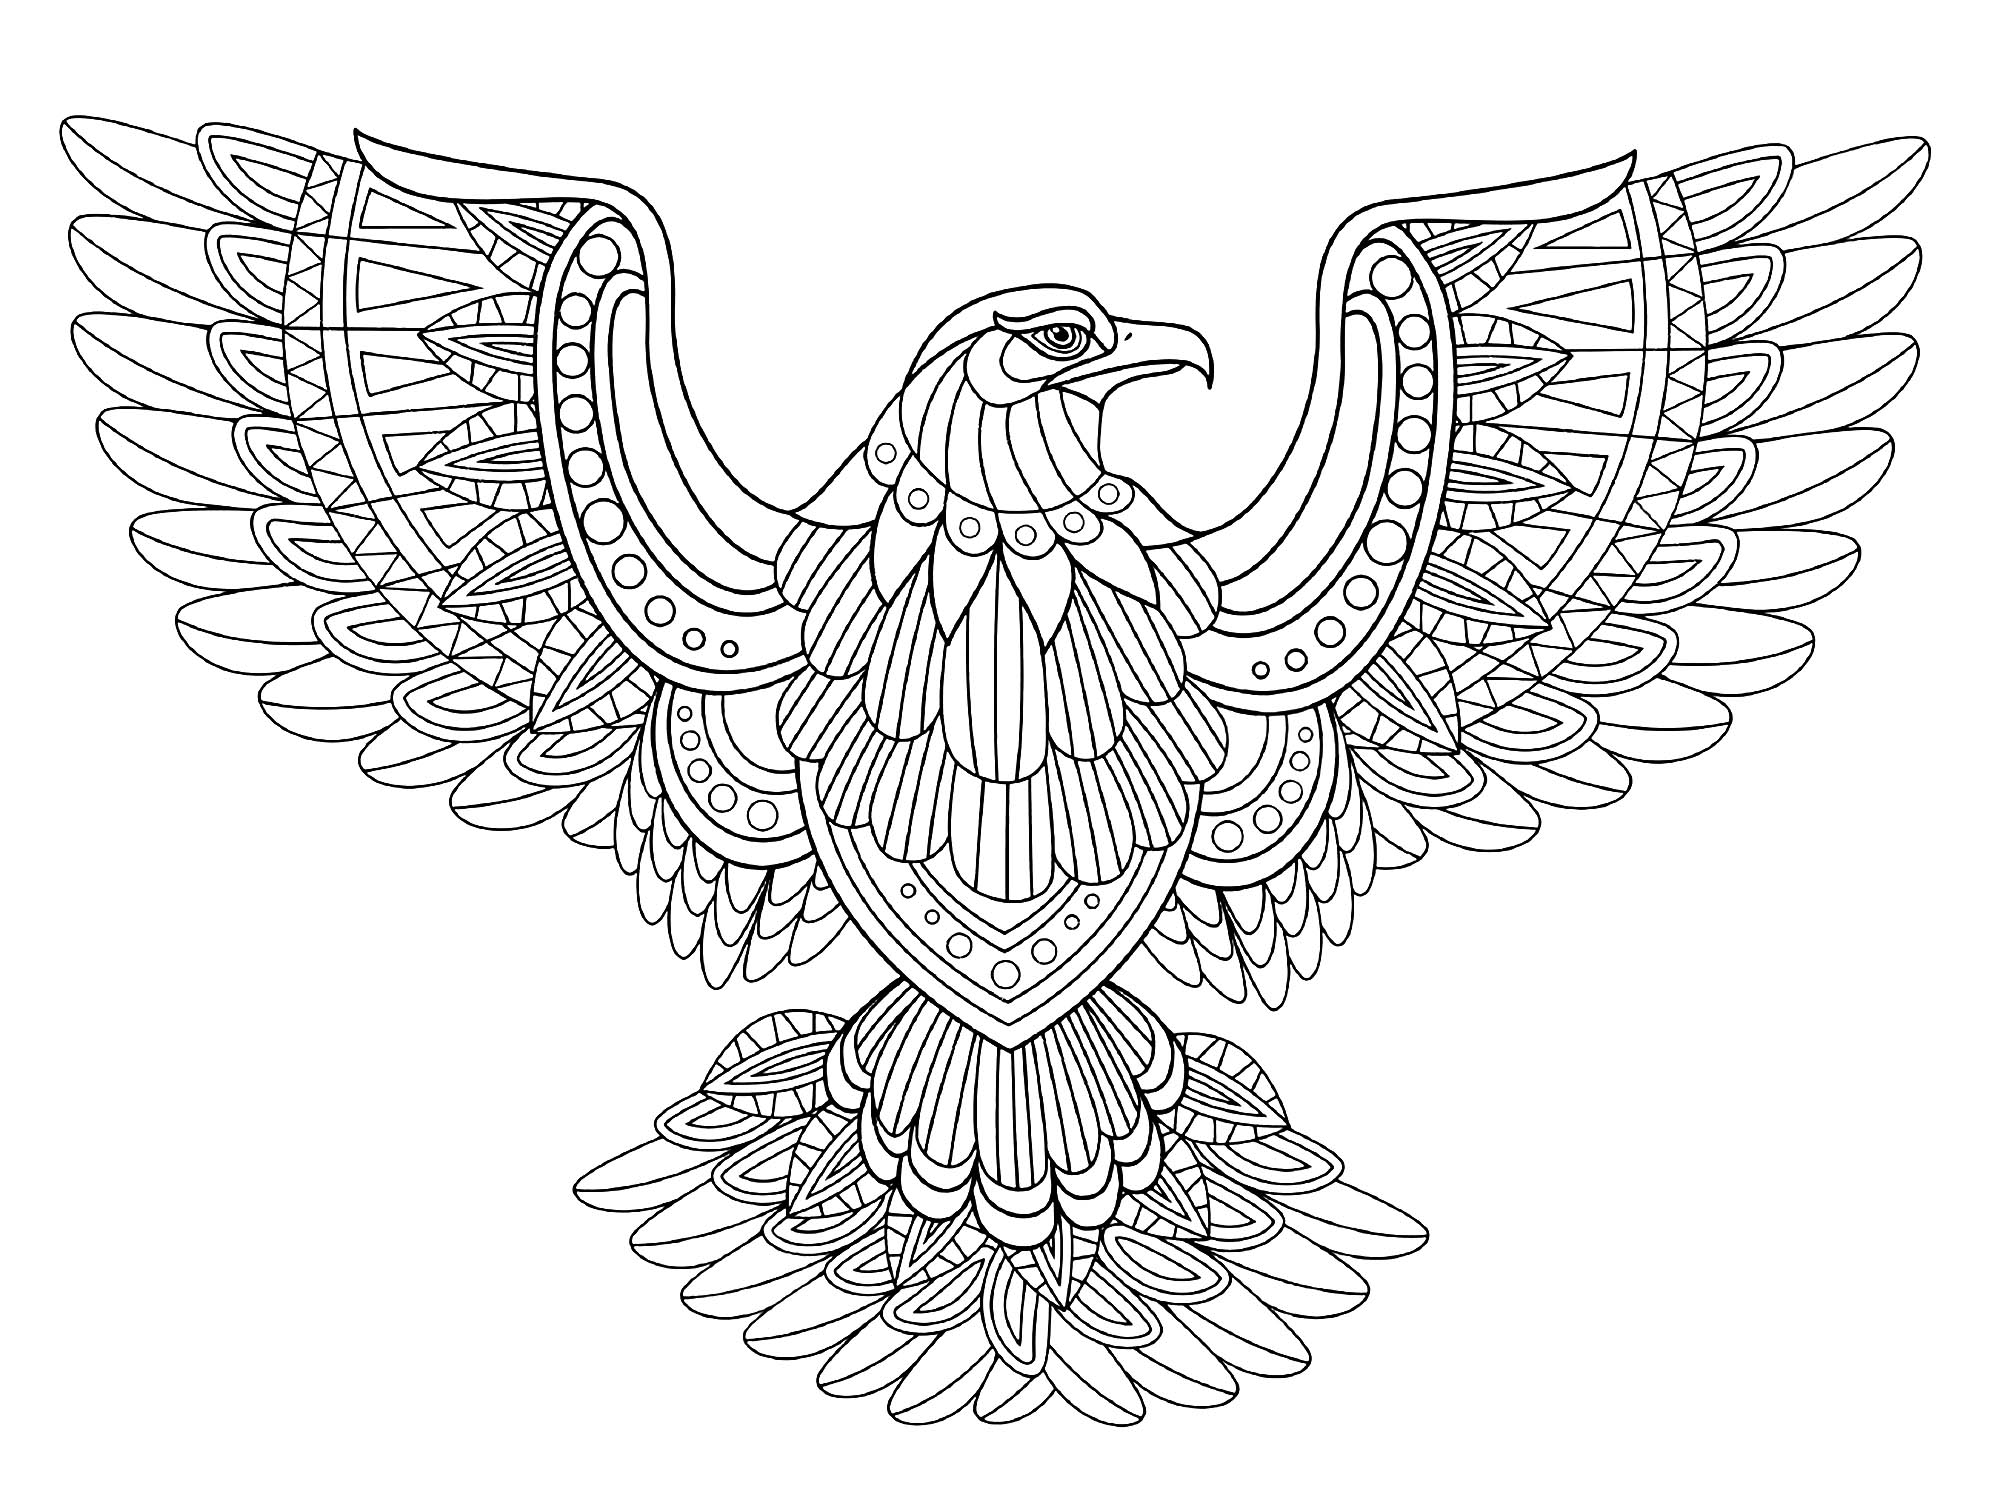 Águila con las alas desplegadas, Artista : Kchung   Origen : 123rf